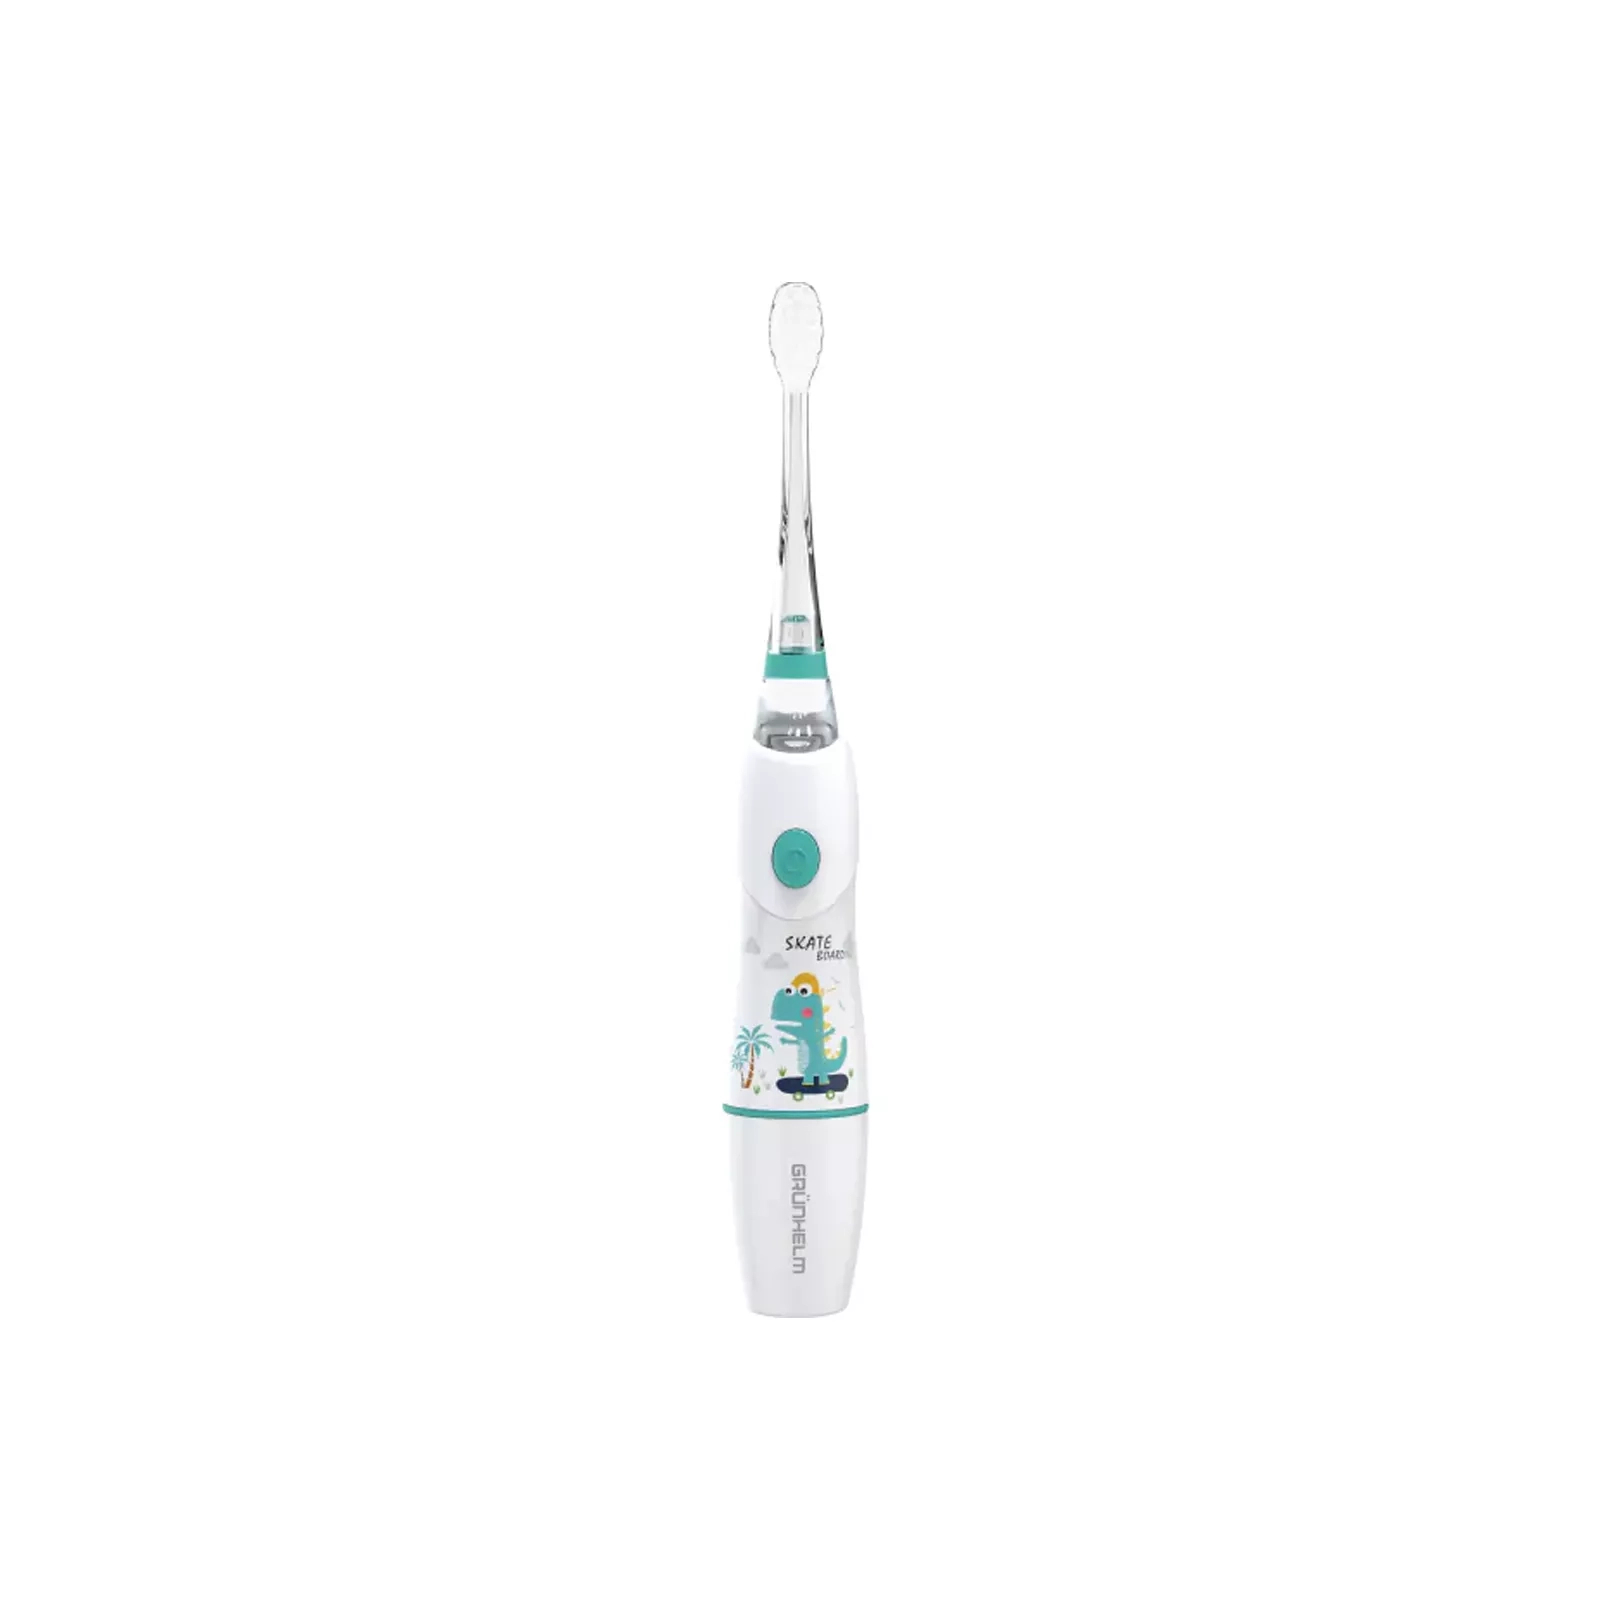 Електрична зубна щітка Grunhelm GKS-D3H